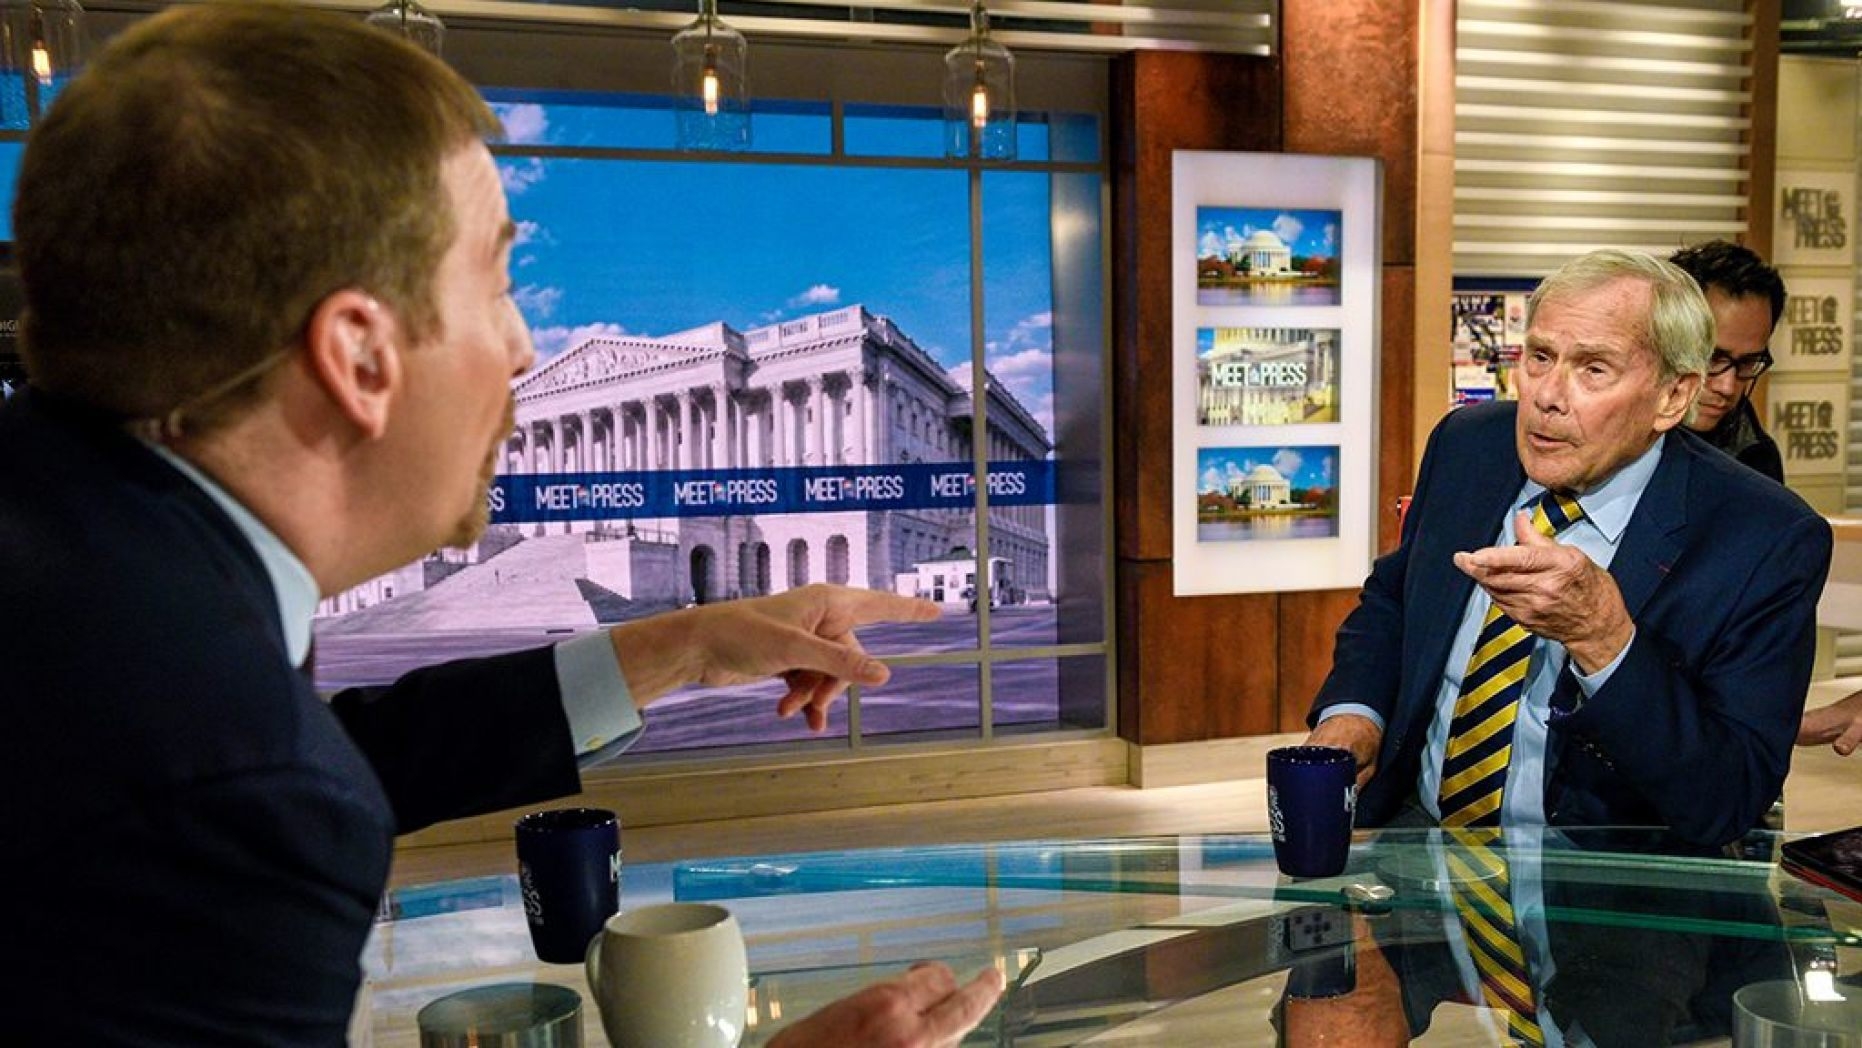 NBC News’ Tom Brokaw apologizes after comments on Hispanics spark backlash